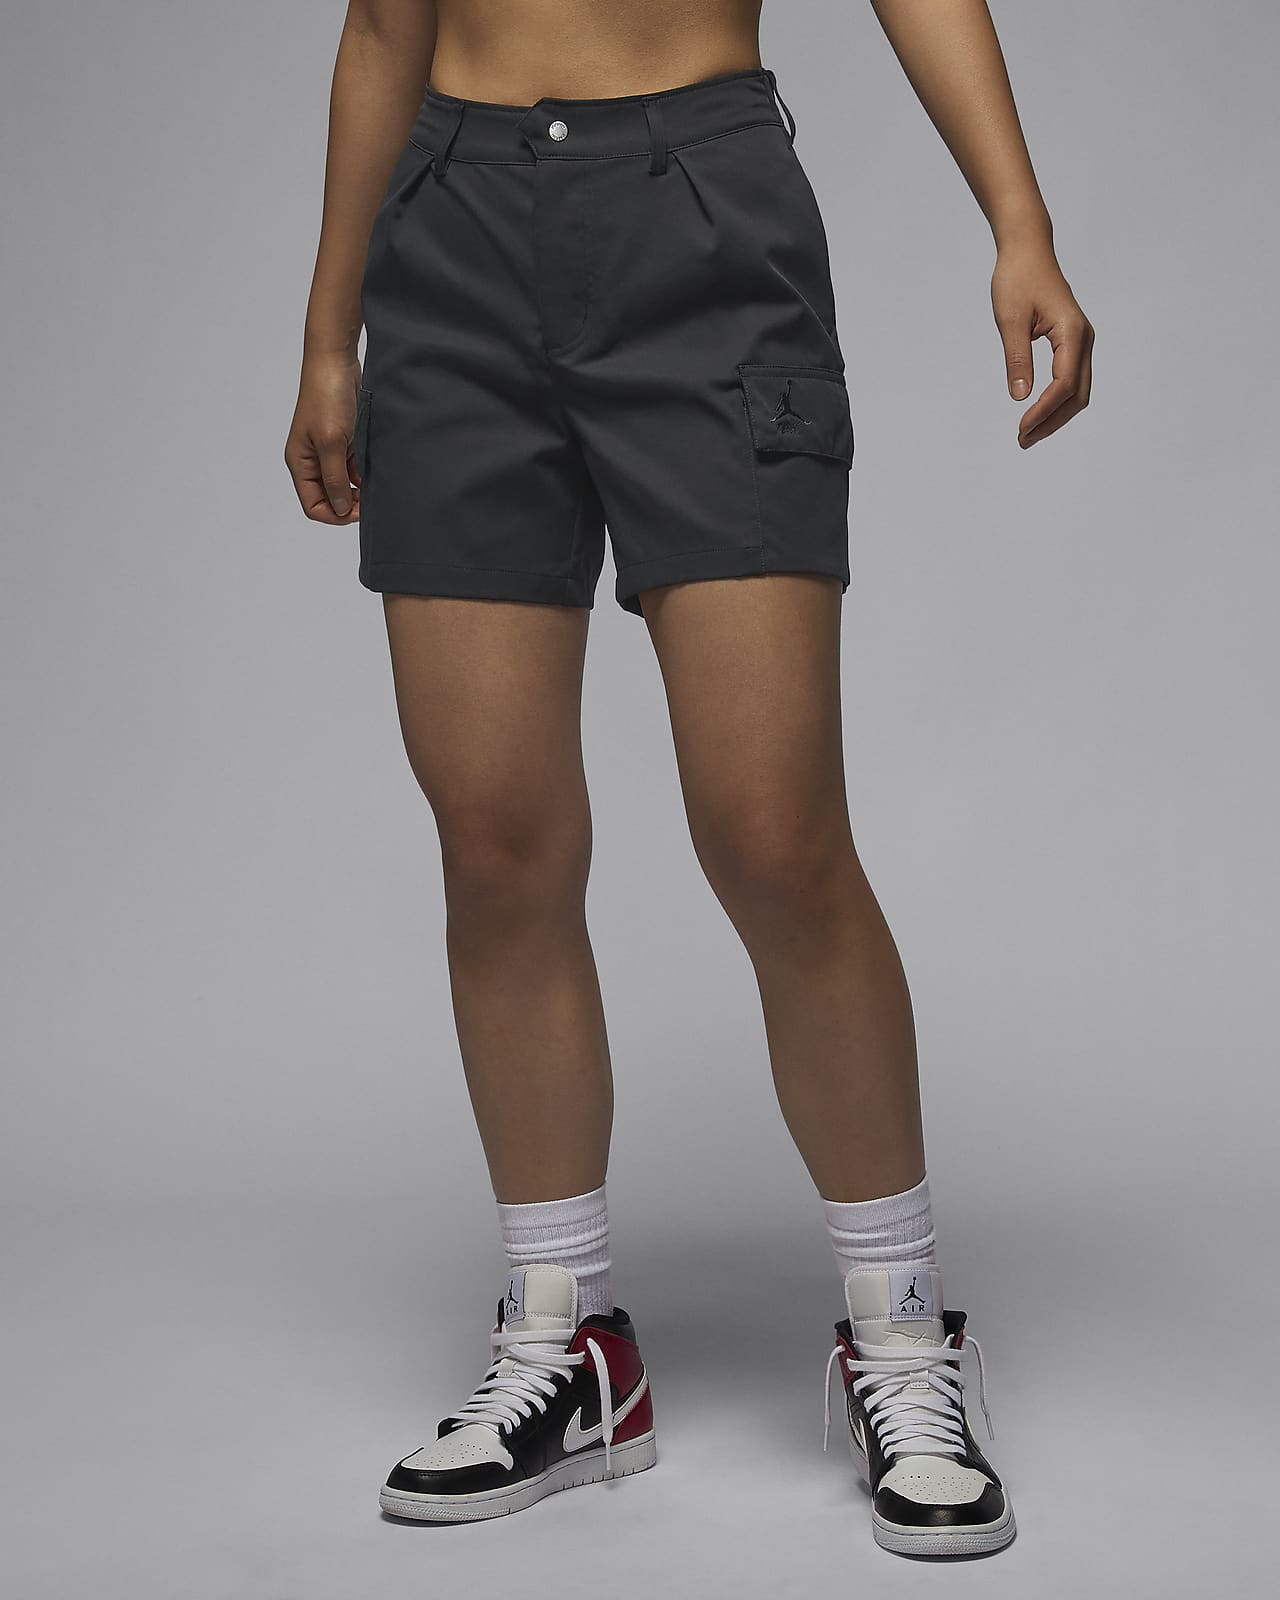 Jordan Chicago Women's Shorts